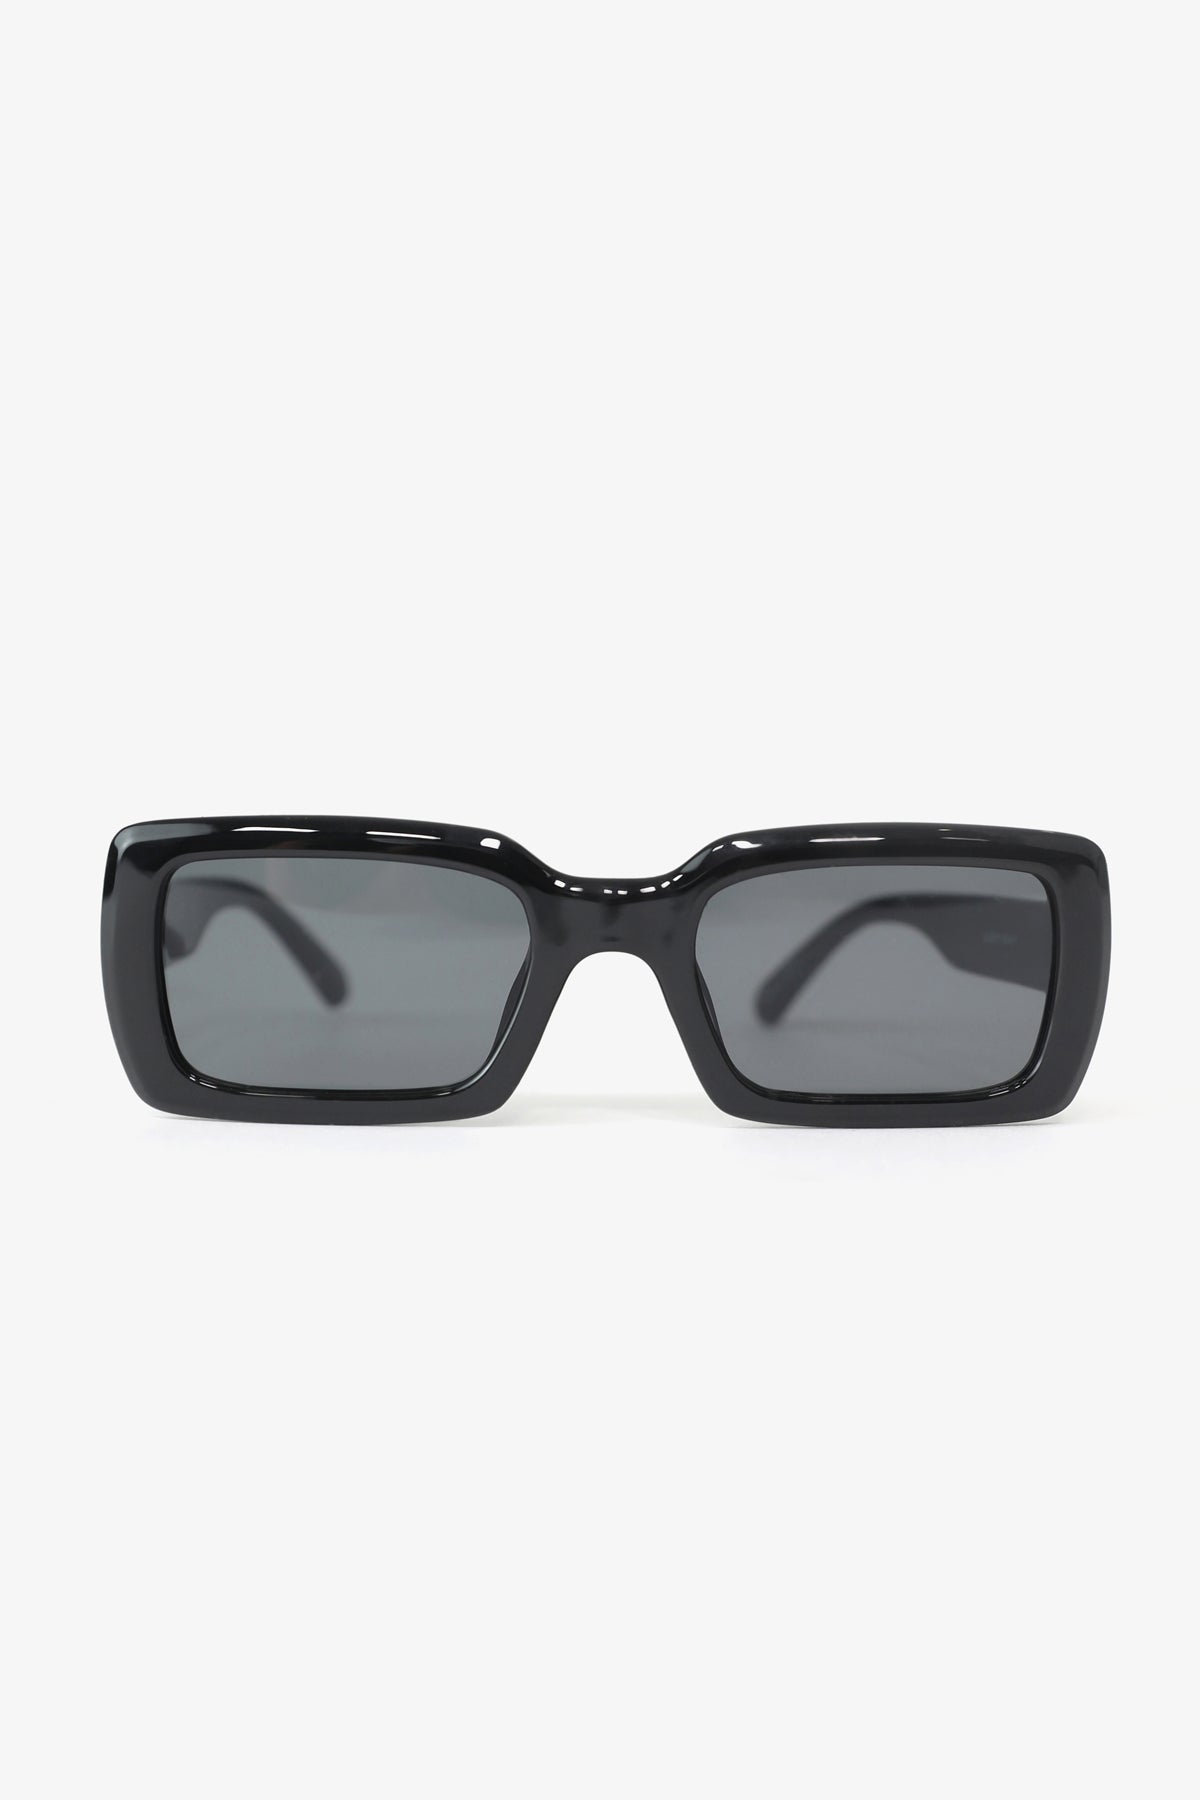 Out of Office Cat Eye Sunglasses | Kittenish Swim